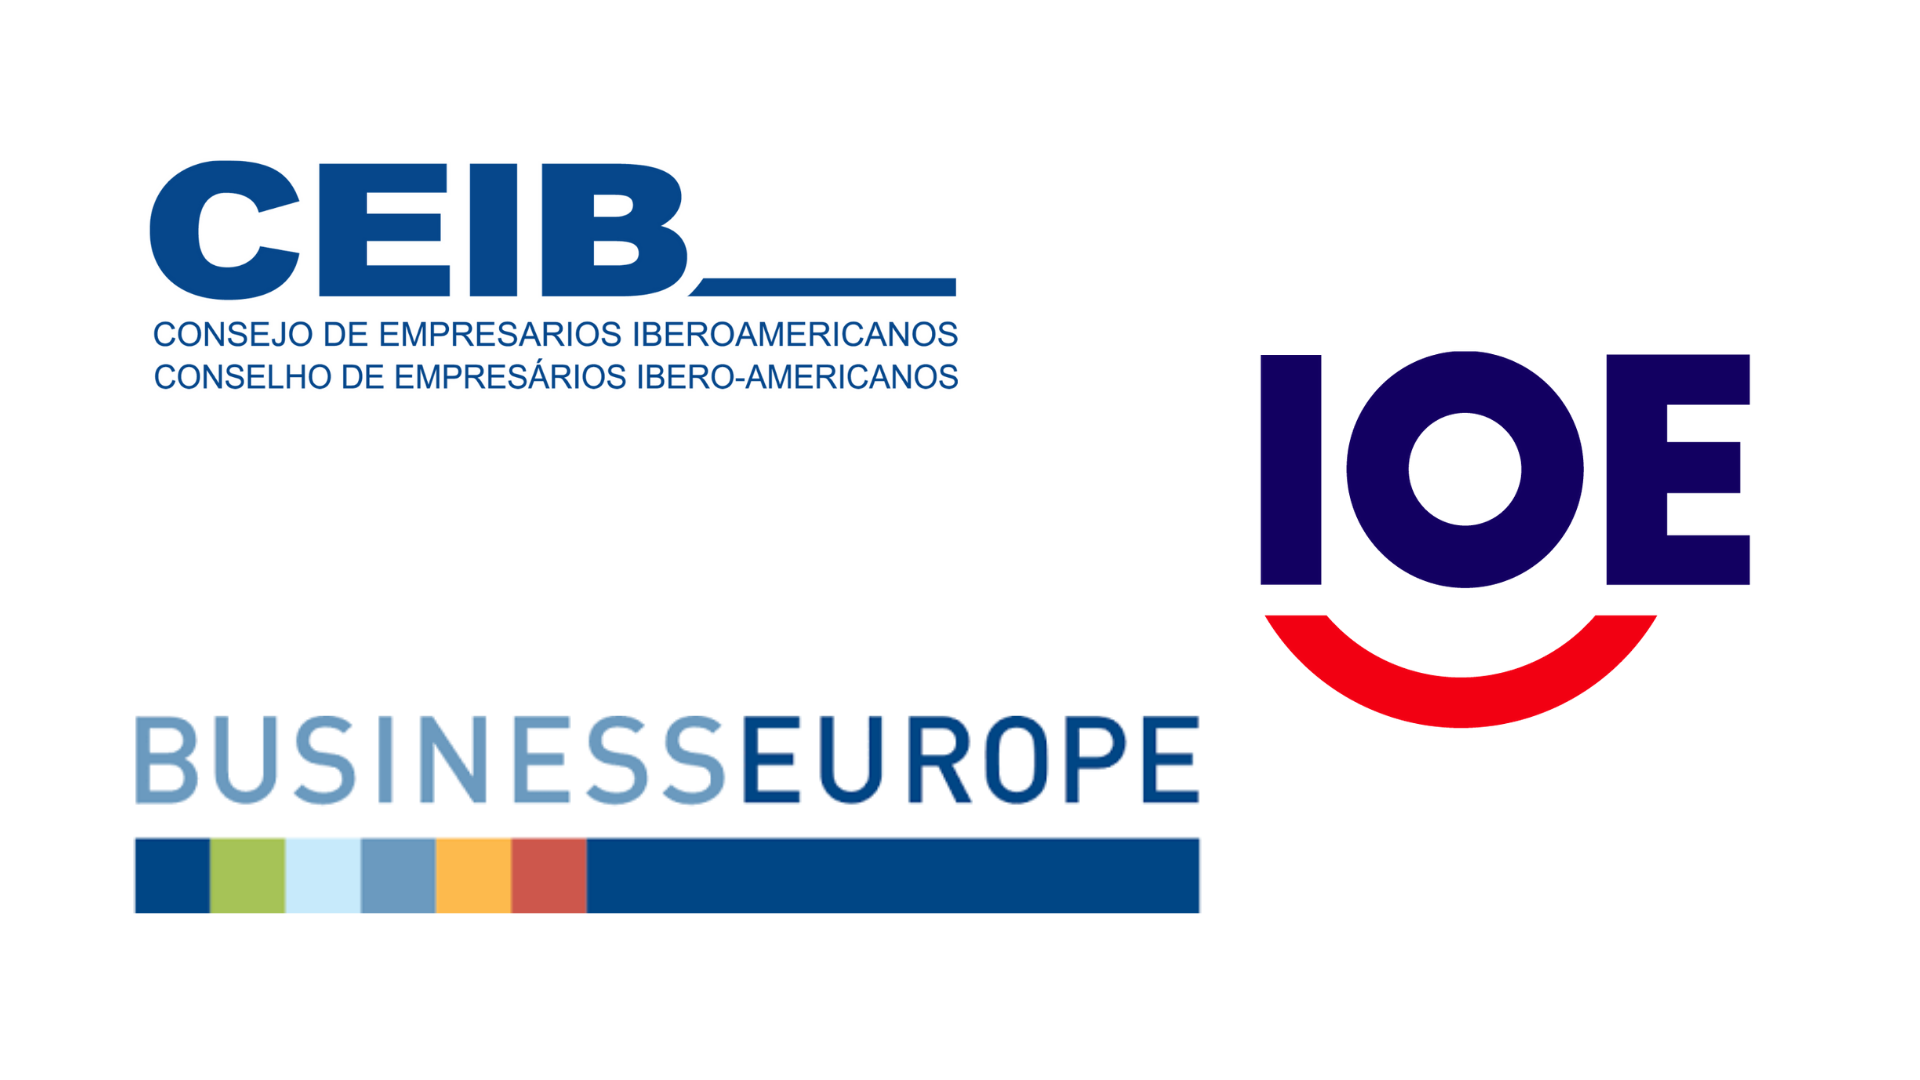 CEIB - OIE - Business Europe